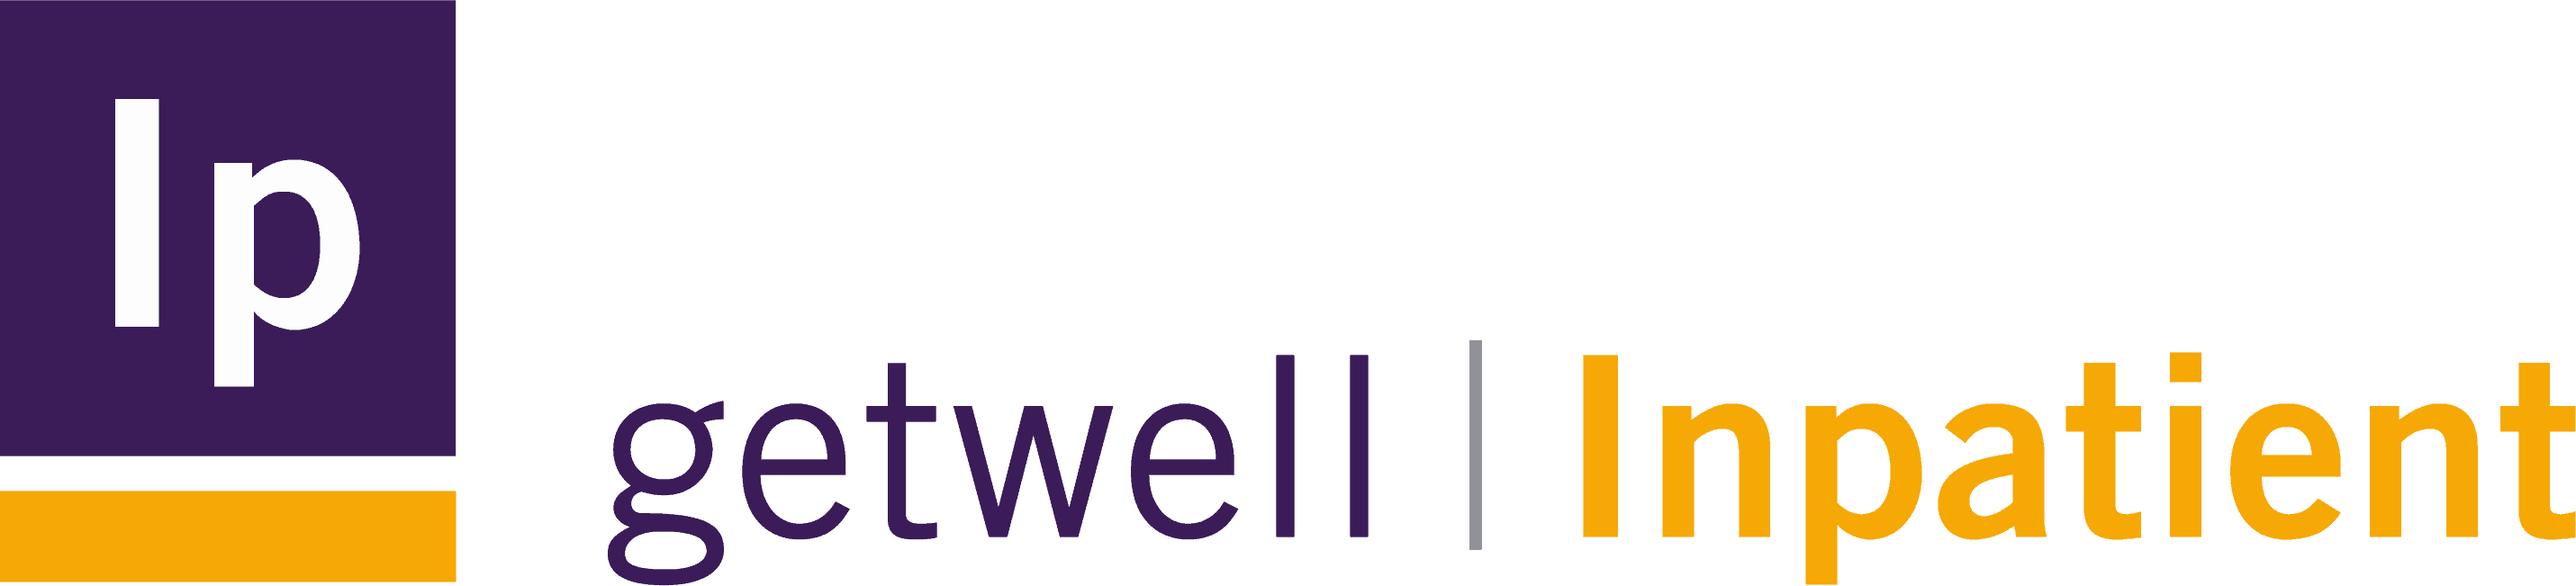 GetWell_Inpatient_lockup_bug